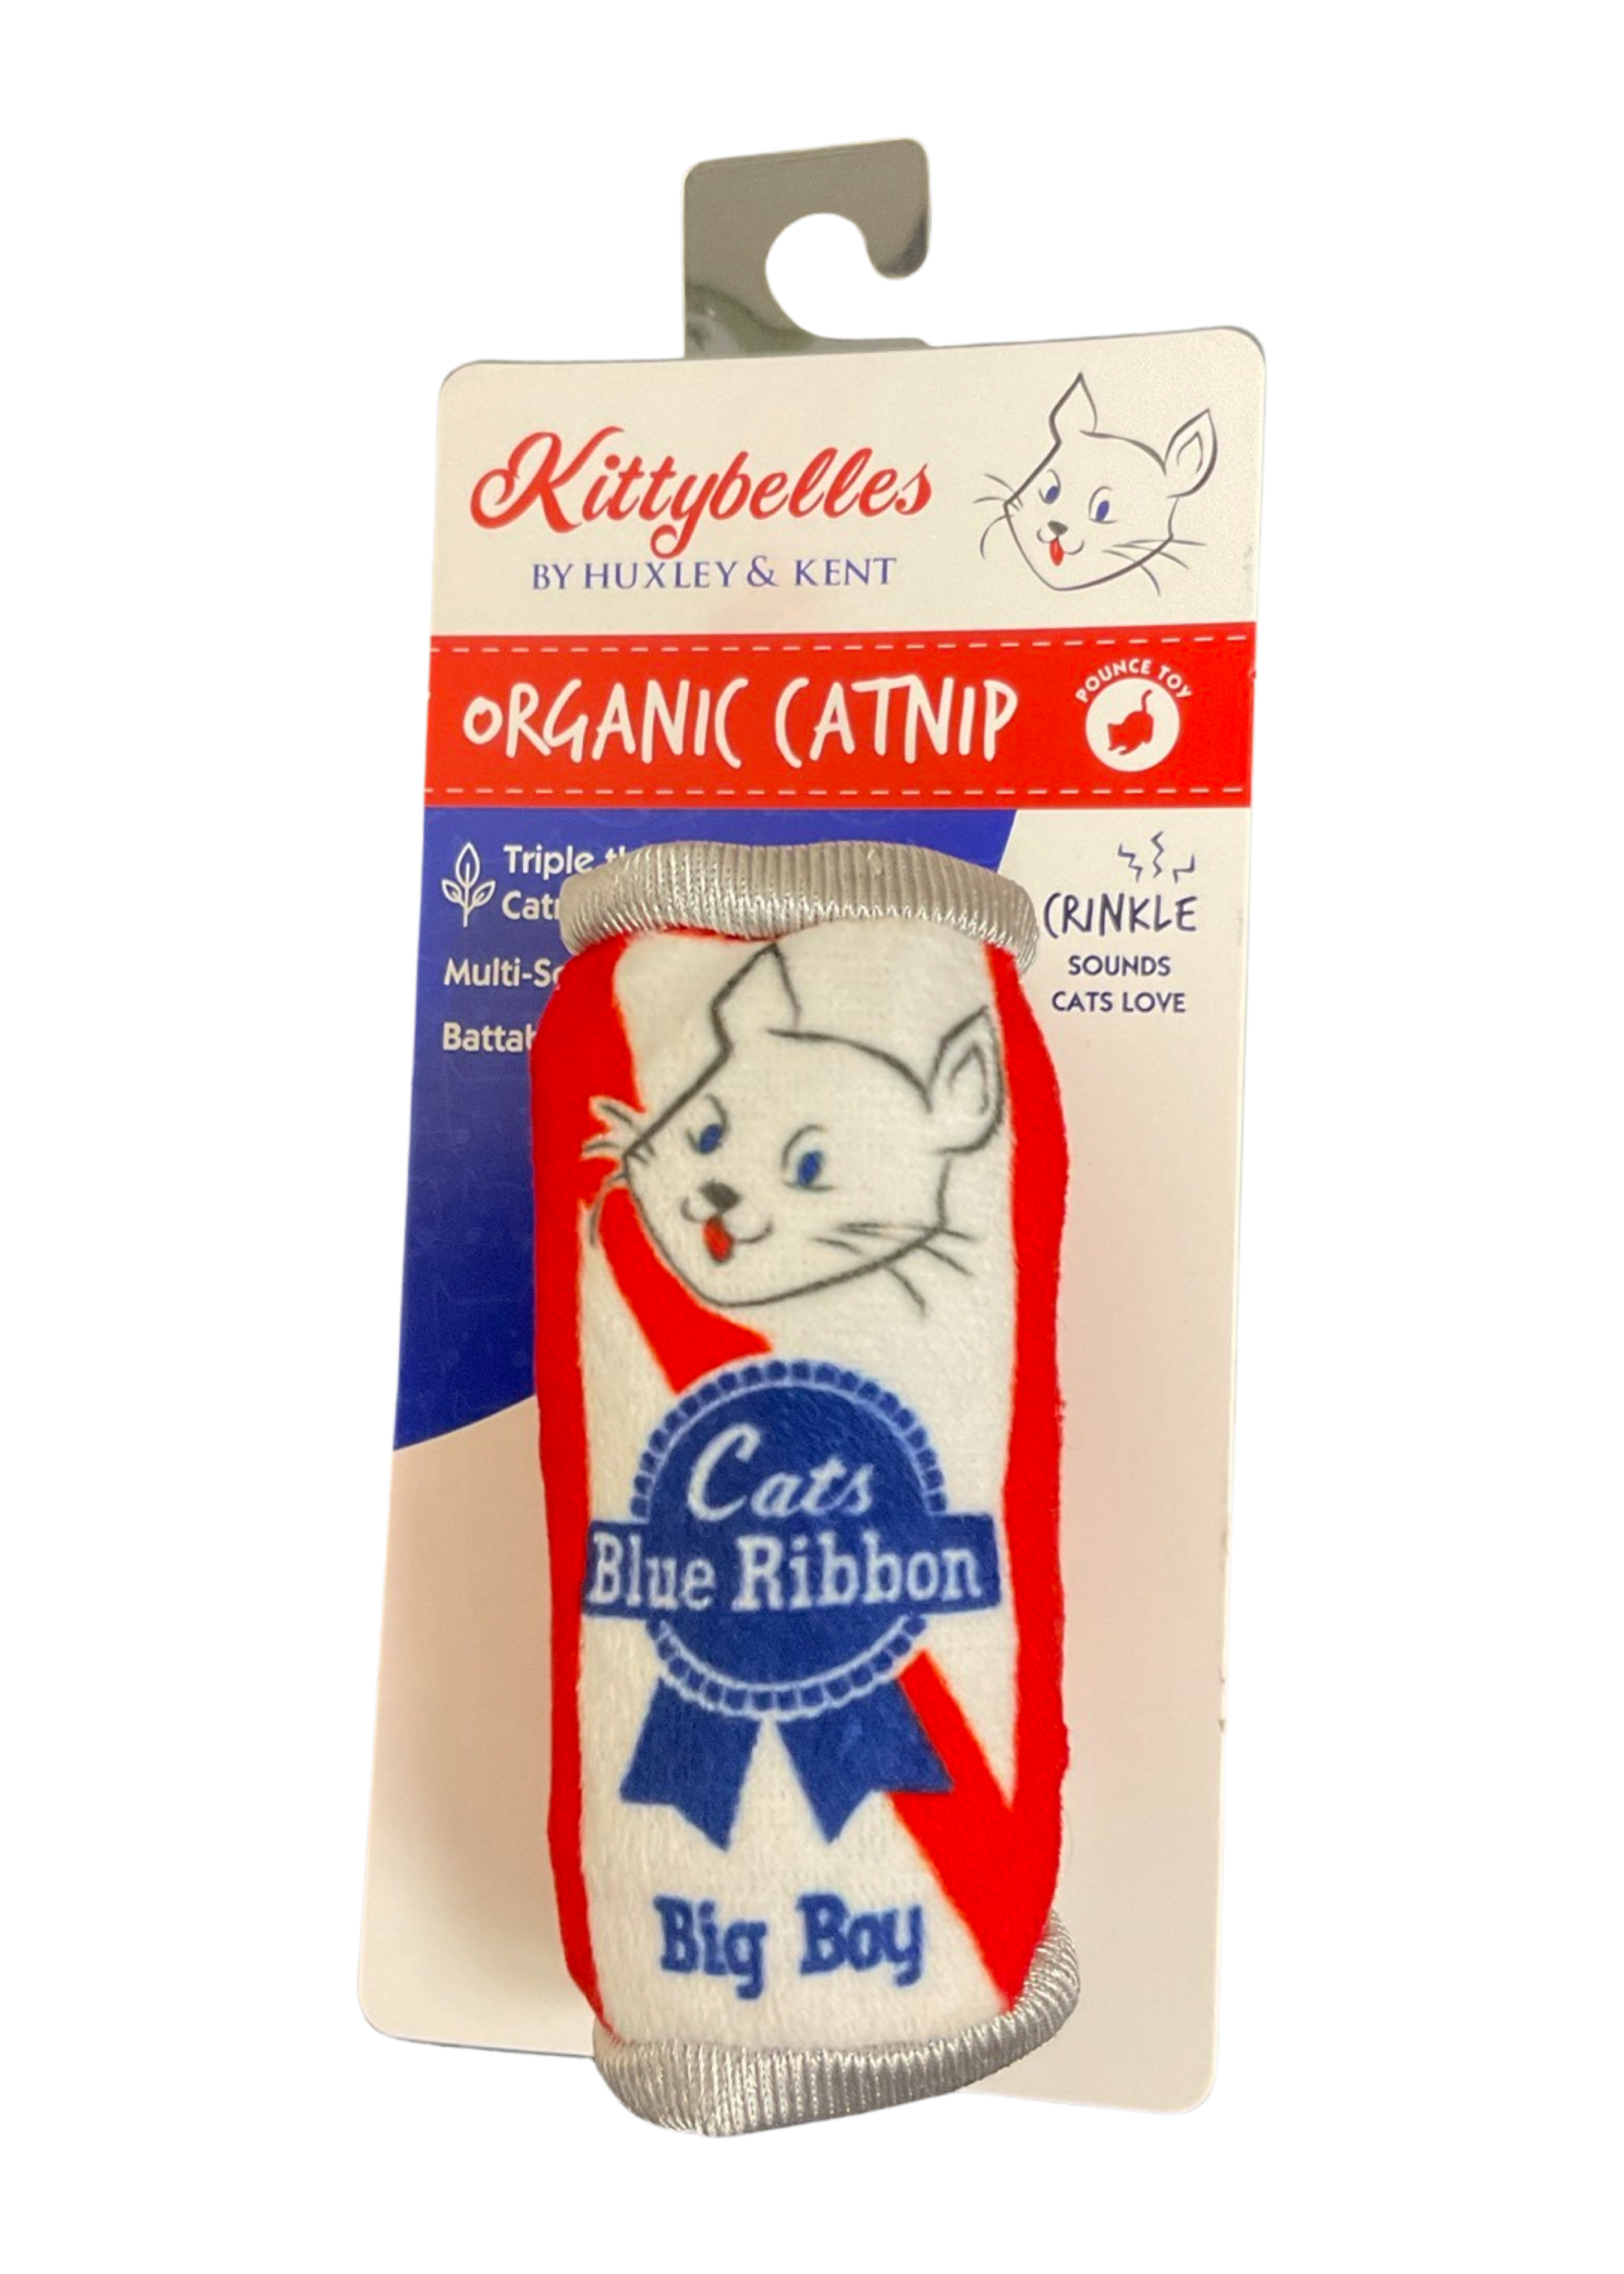 Kittybelles Blue Ribbon